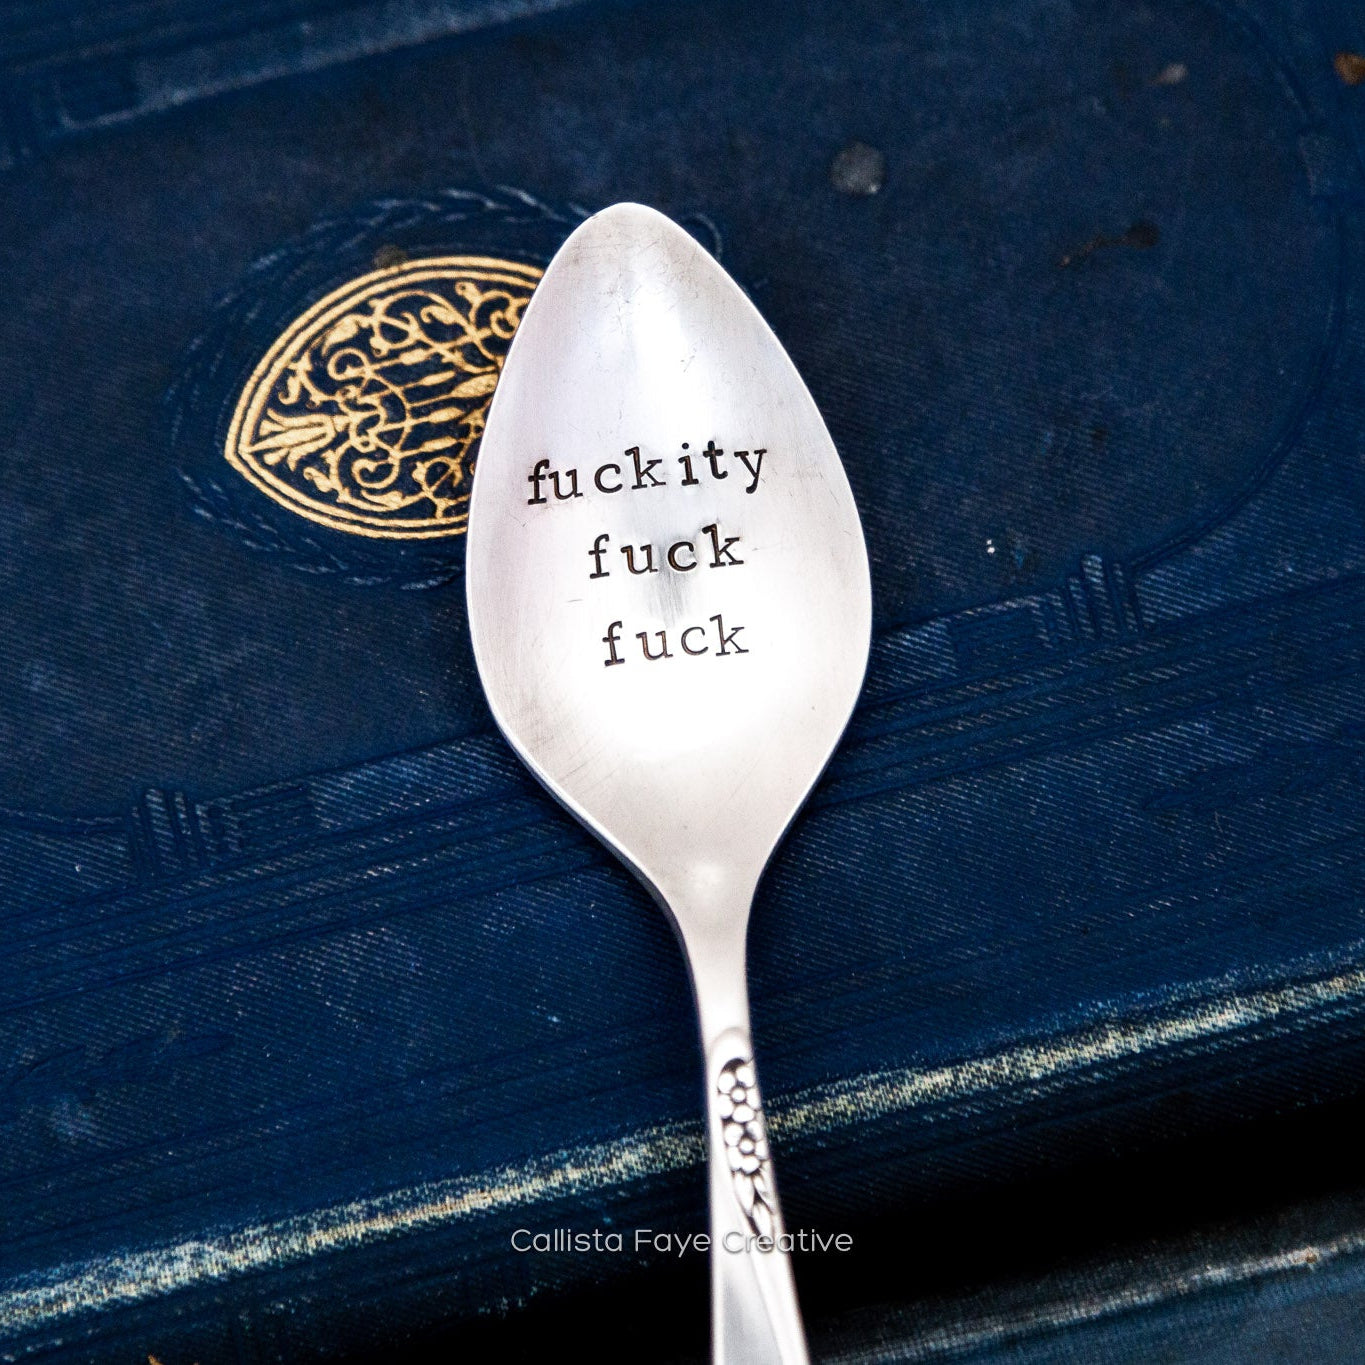 Fuckity Fuck Fuck, Hand Stamped Vintage Spoon Spoons callistafaye   